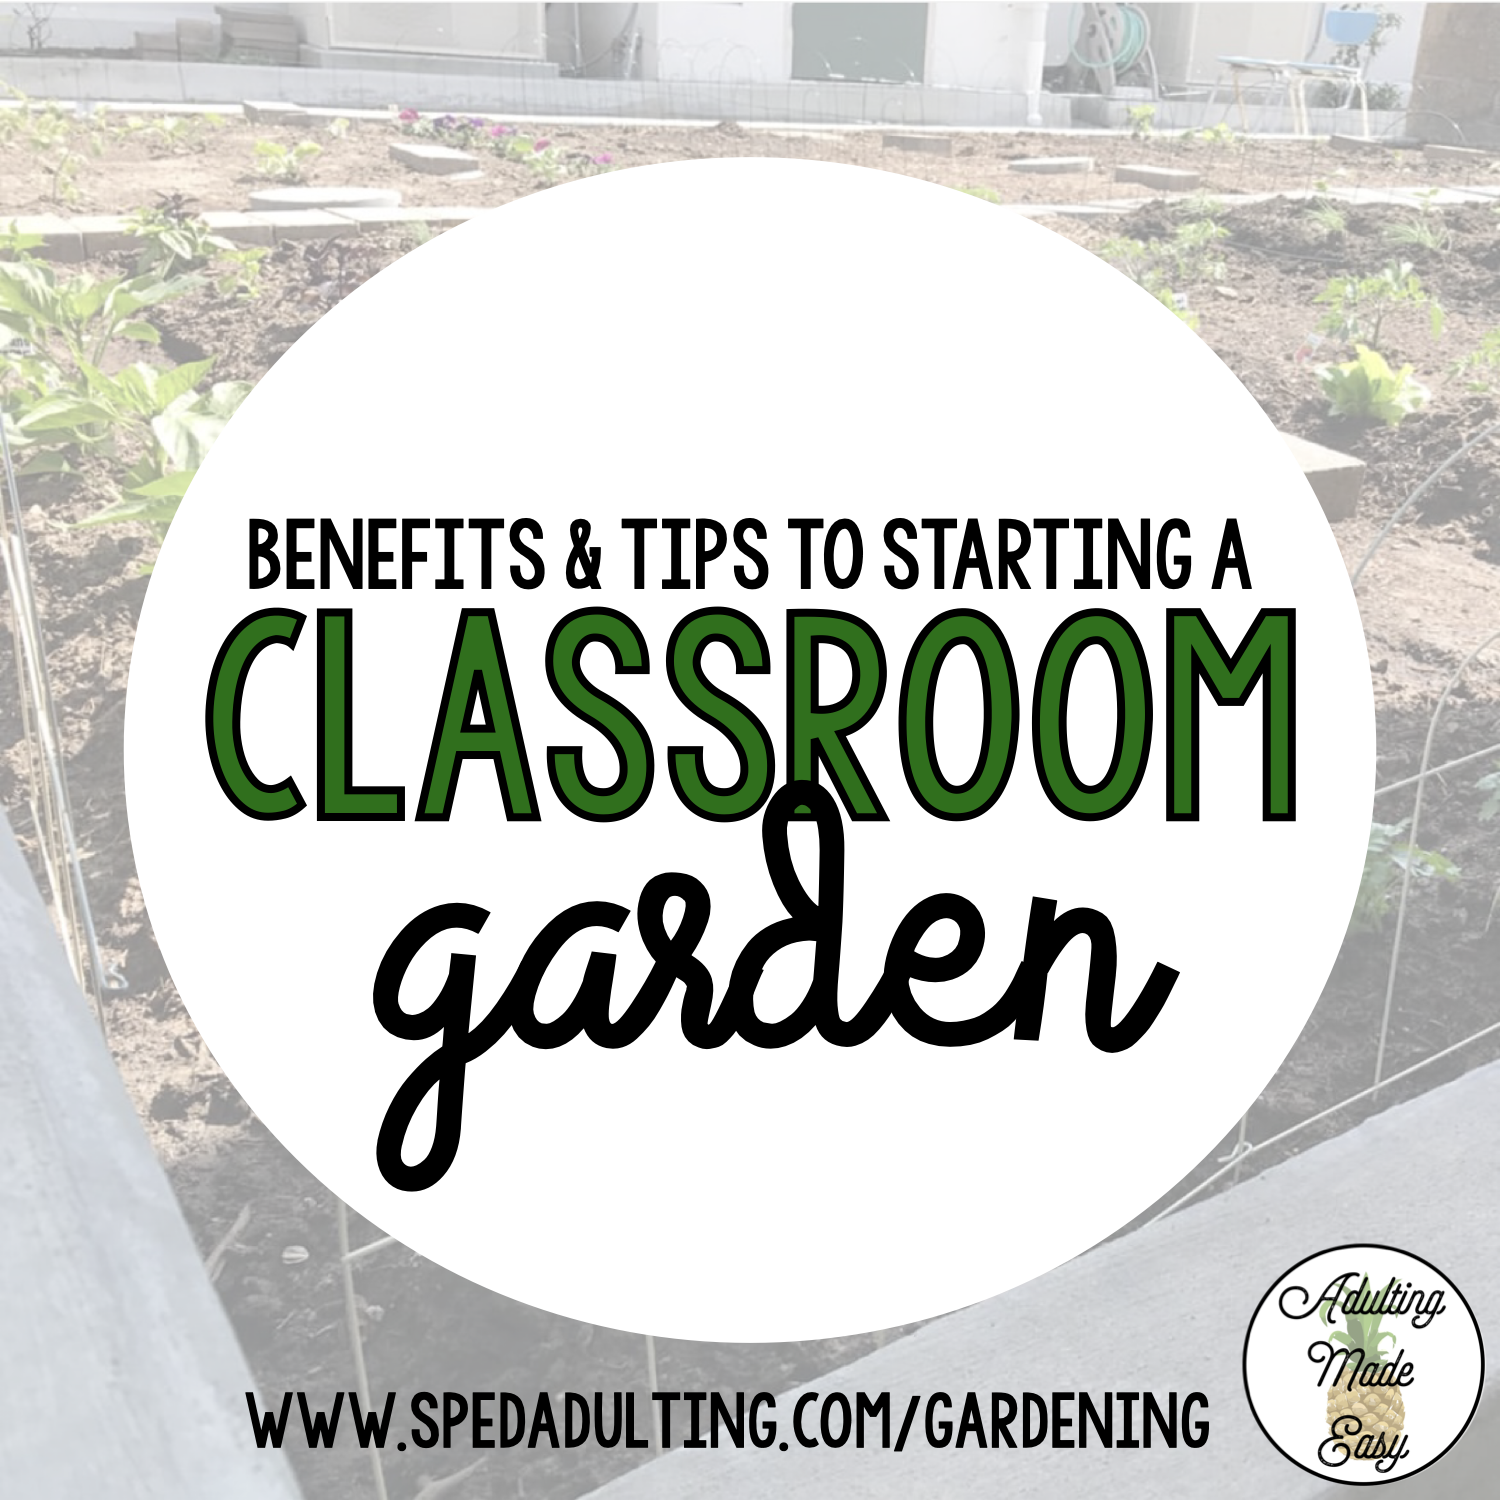 Benefits & tips to starting a classroom garden